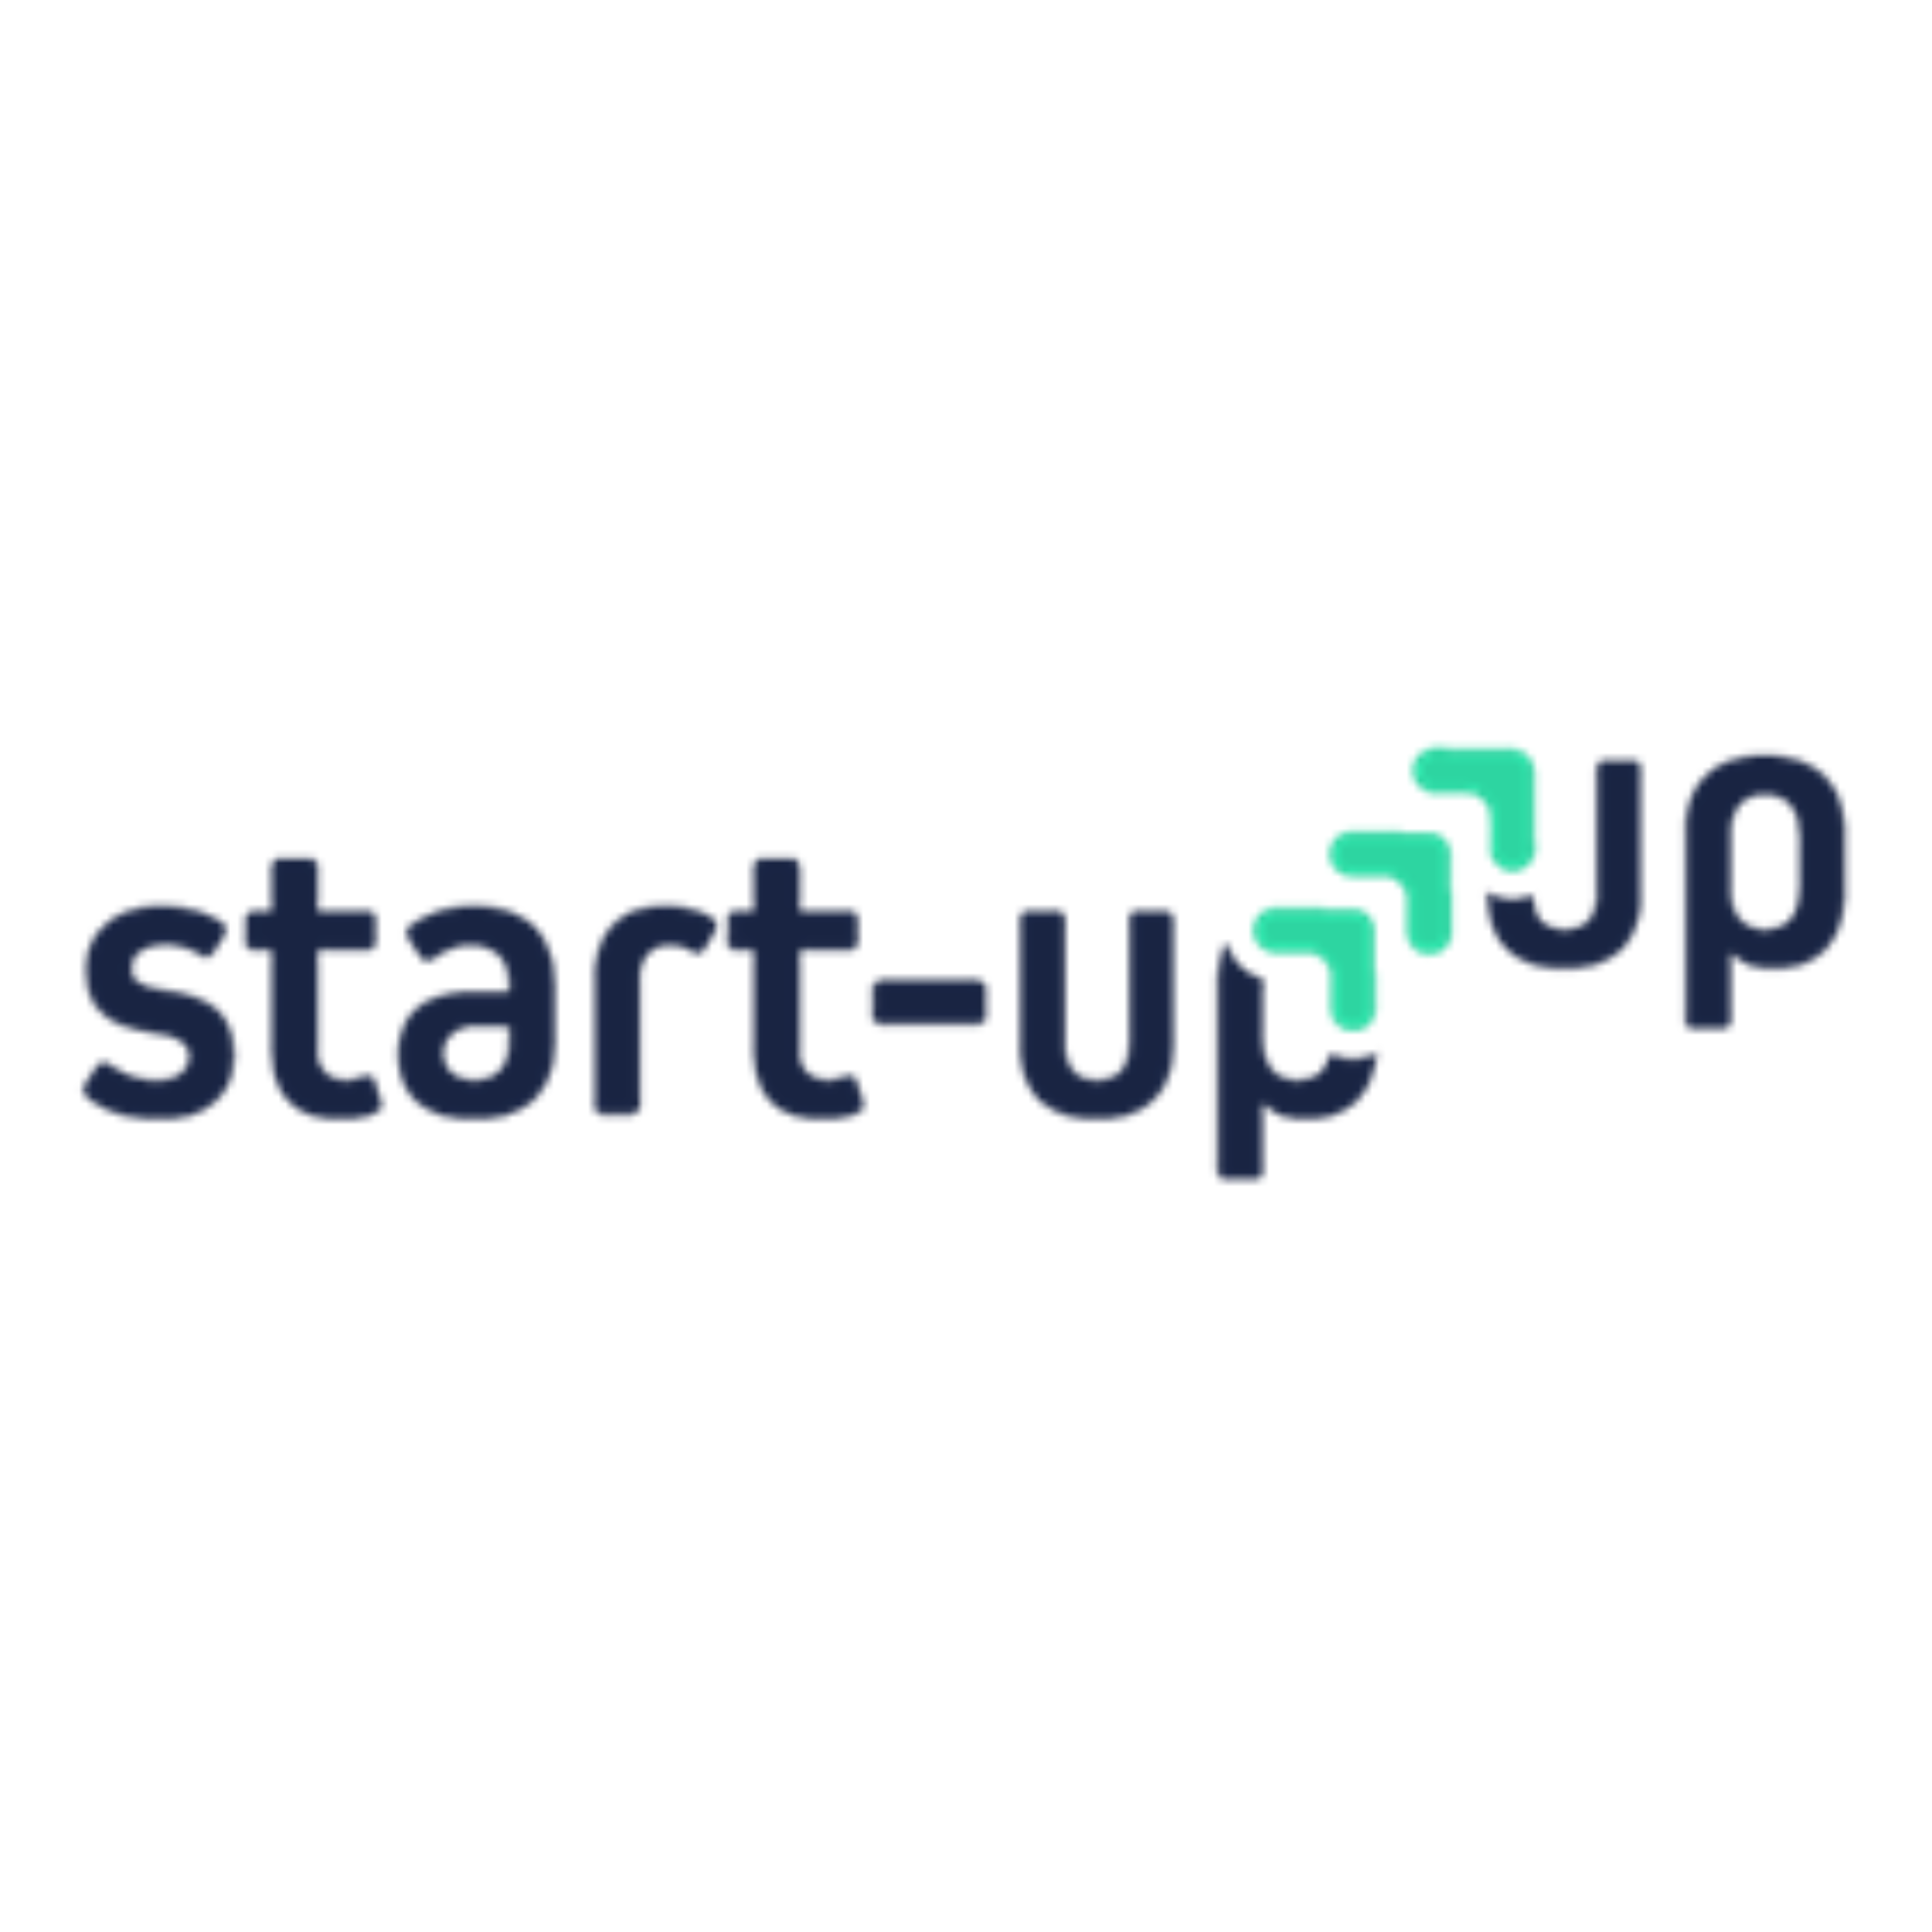 Start-up UP